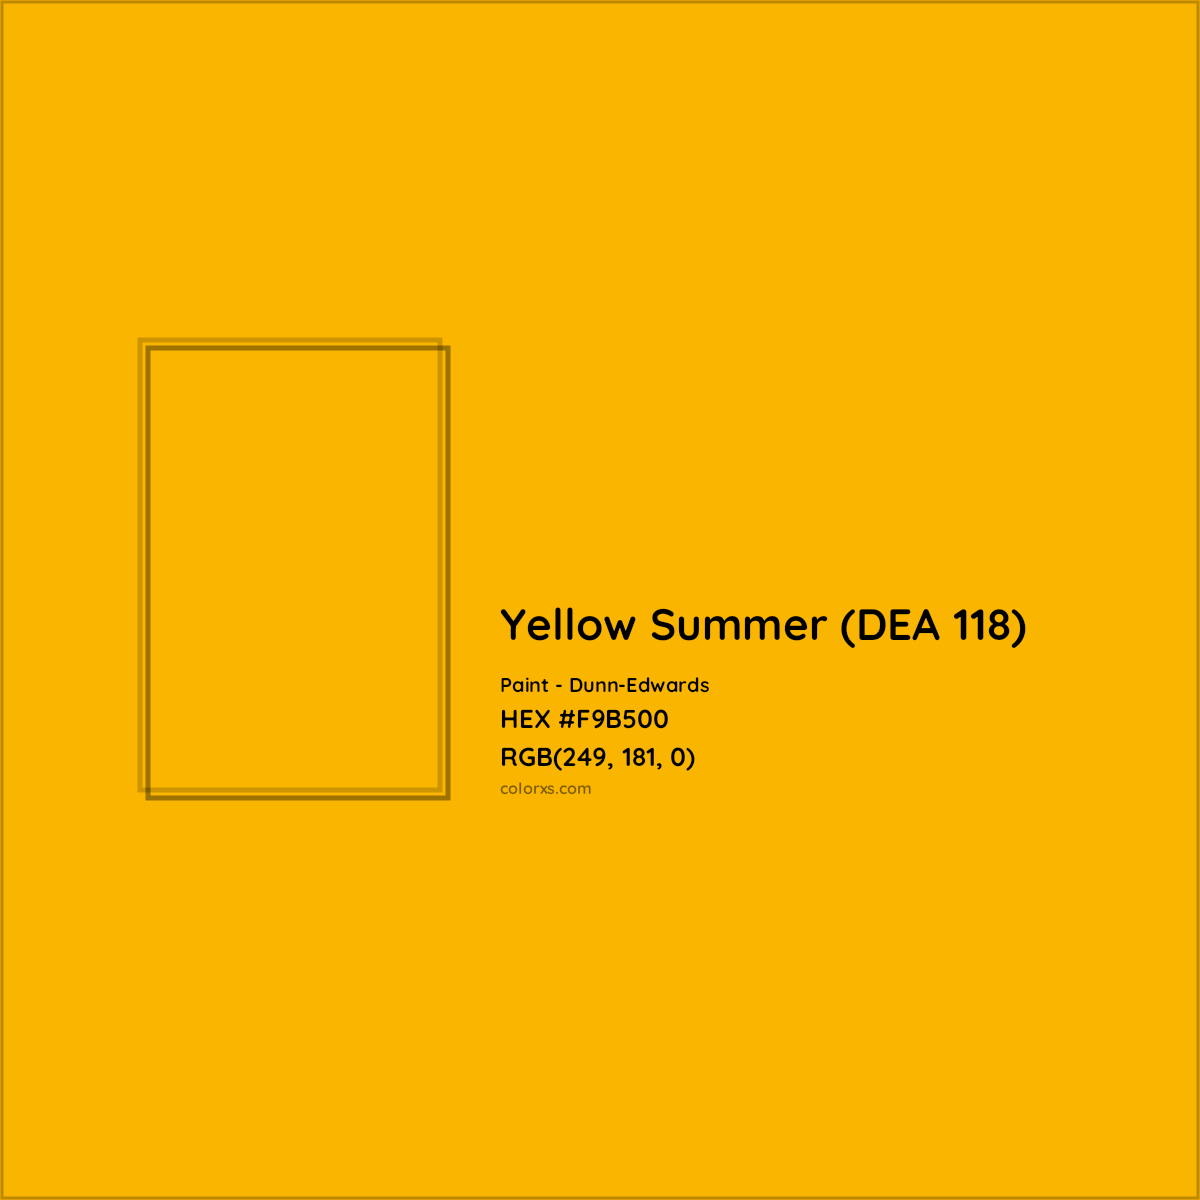 HEX #F9B500 Yellow Summer (DEA 118) Paint Dunn-Edwards - Color Code